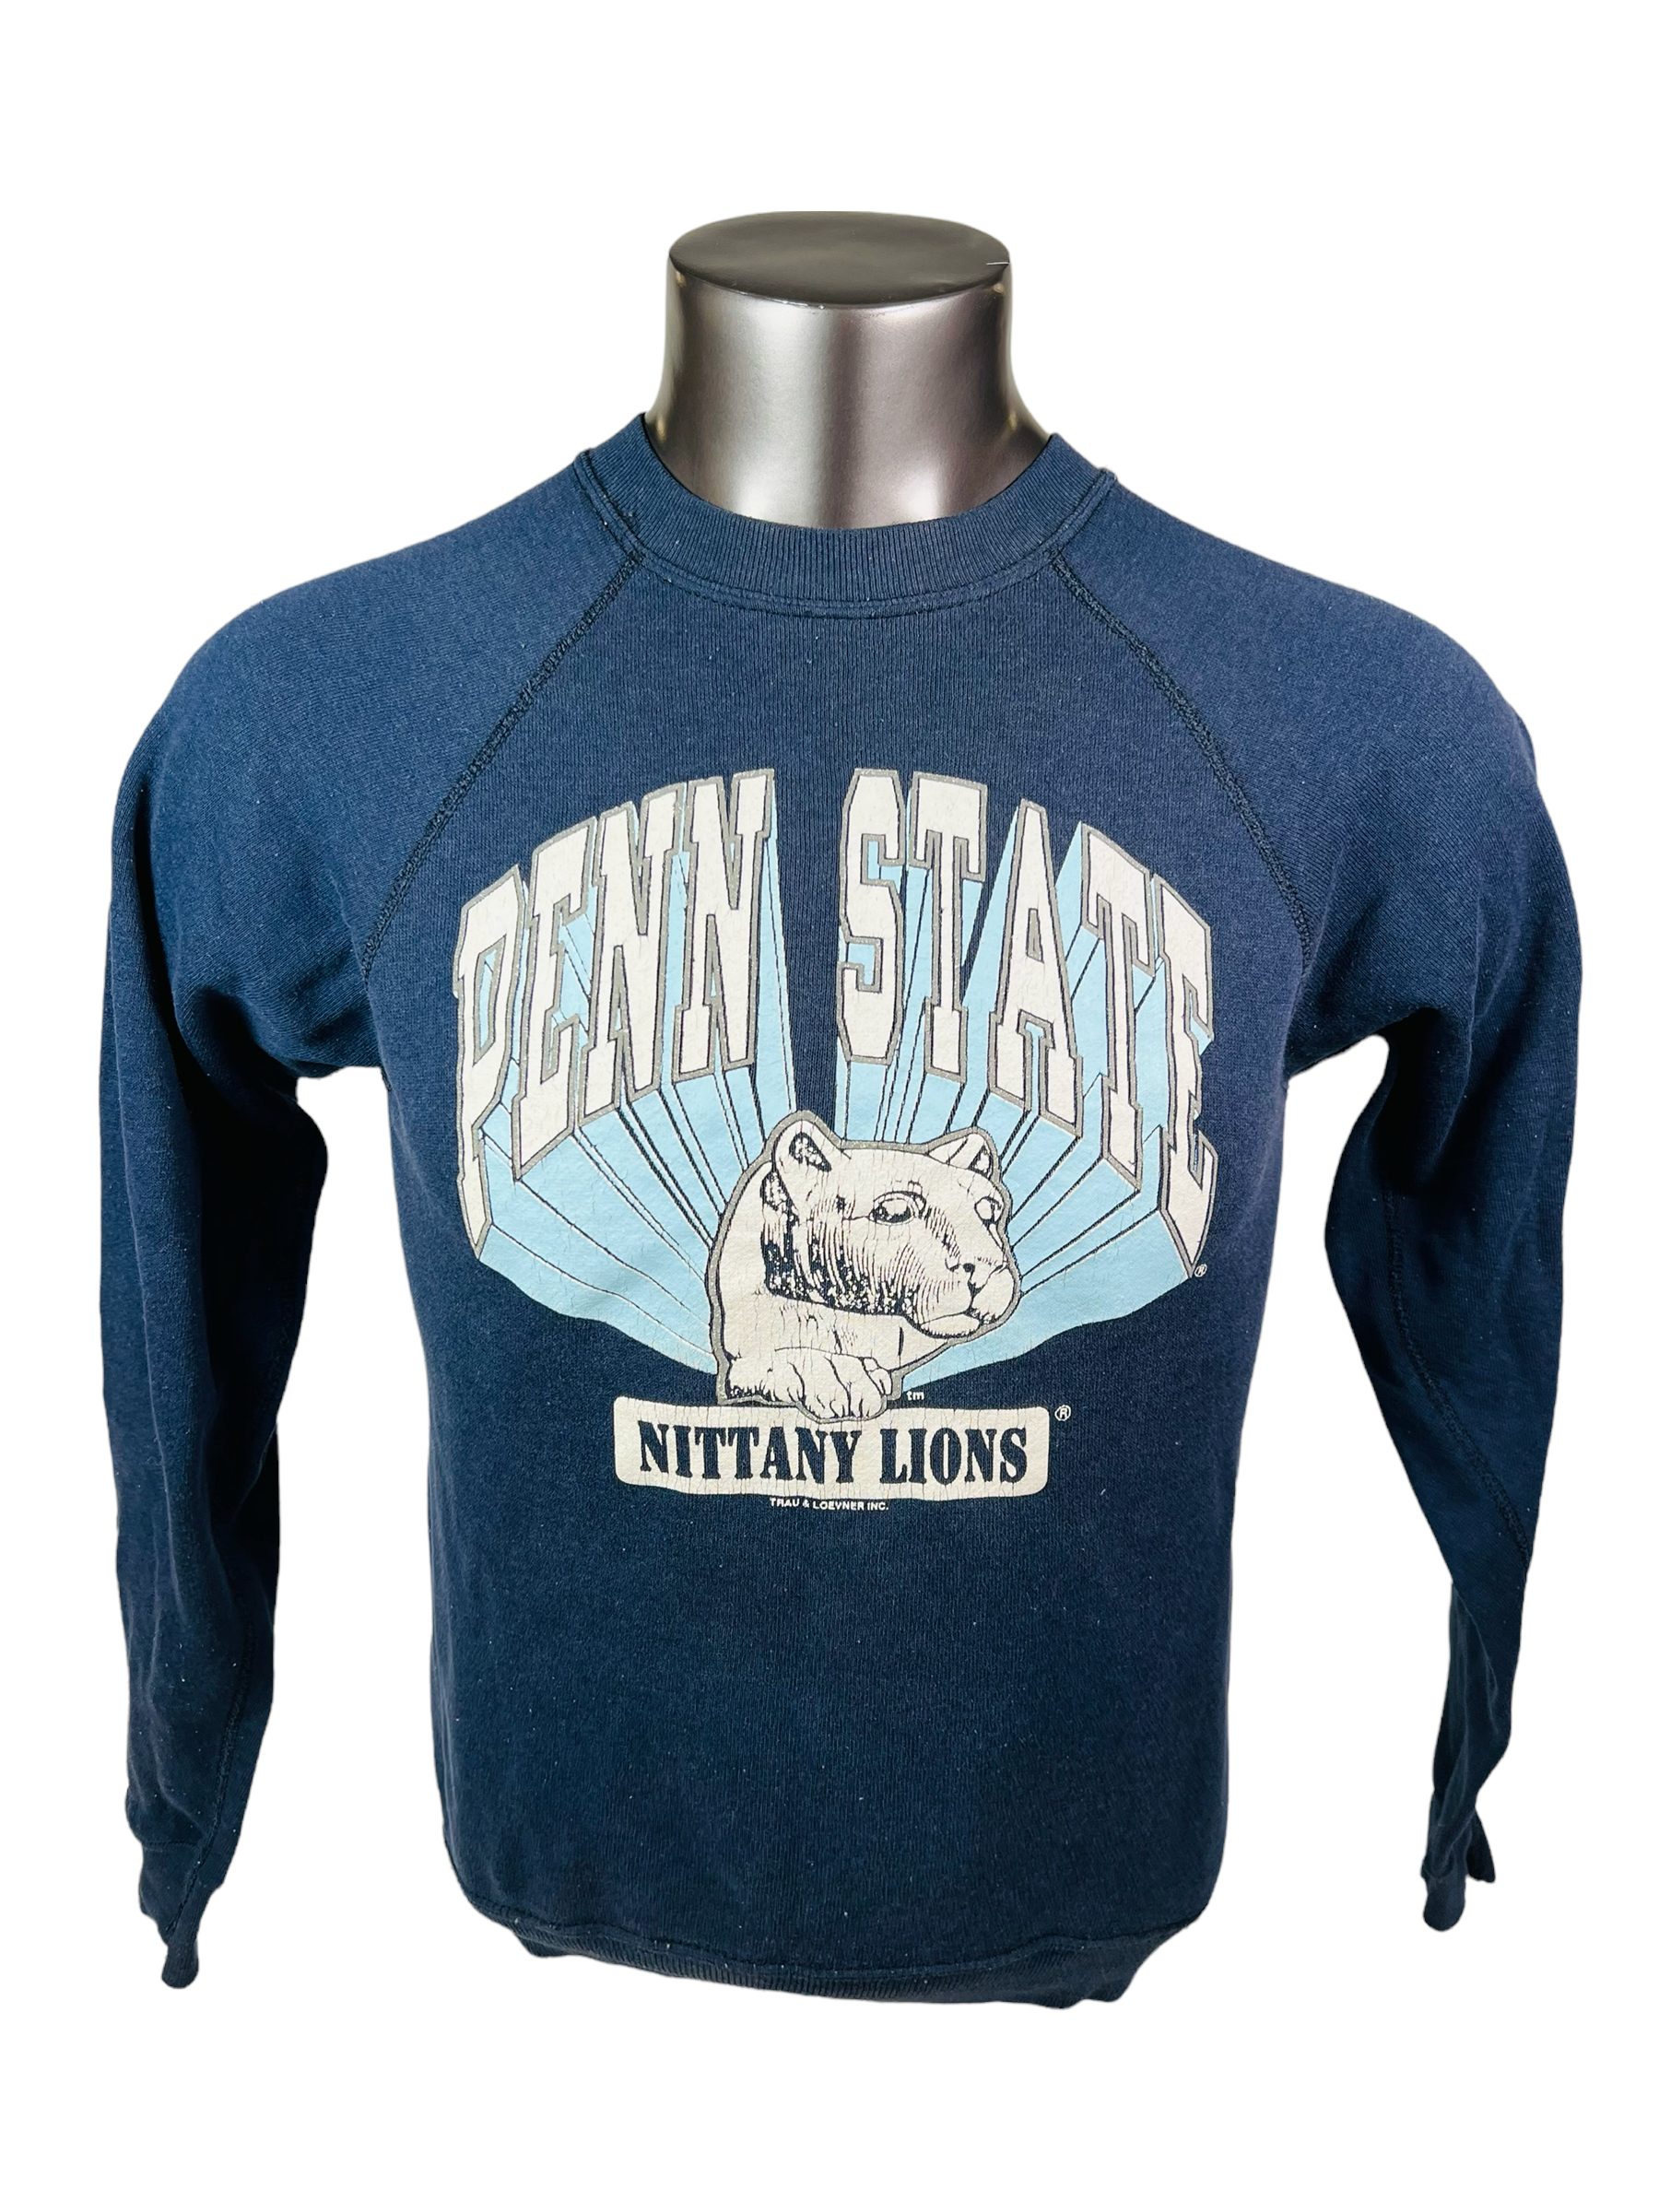 Vintage Milwaukee Bucks Crewneck Sweatshirt Retro Baseball T-Shirt